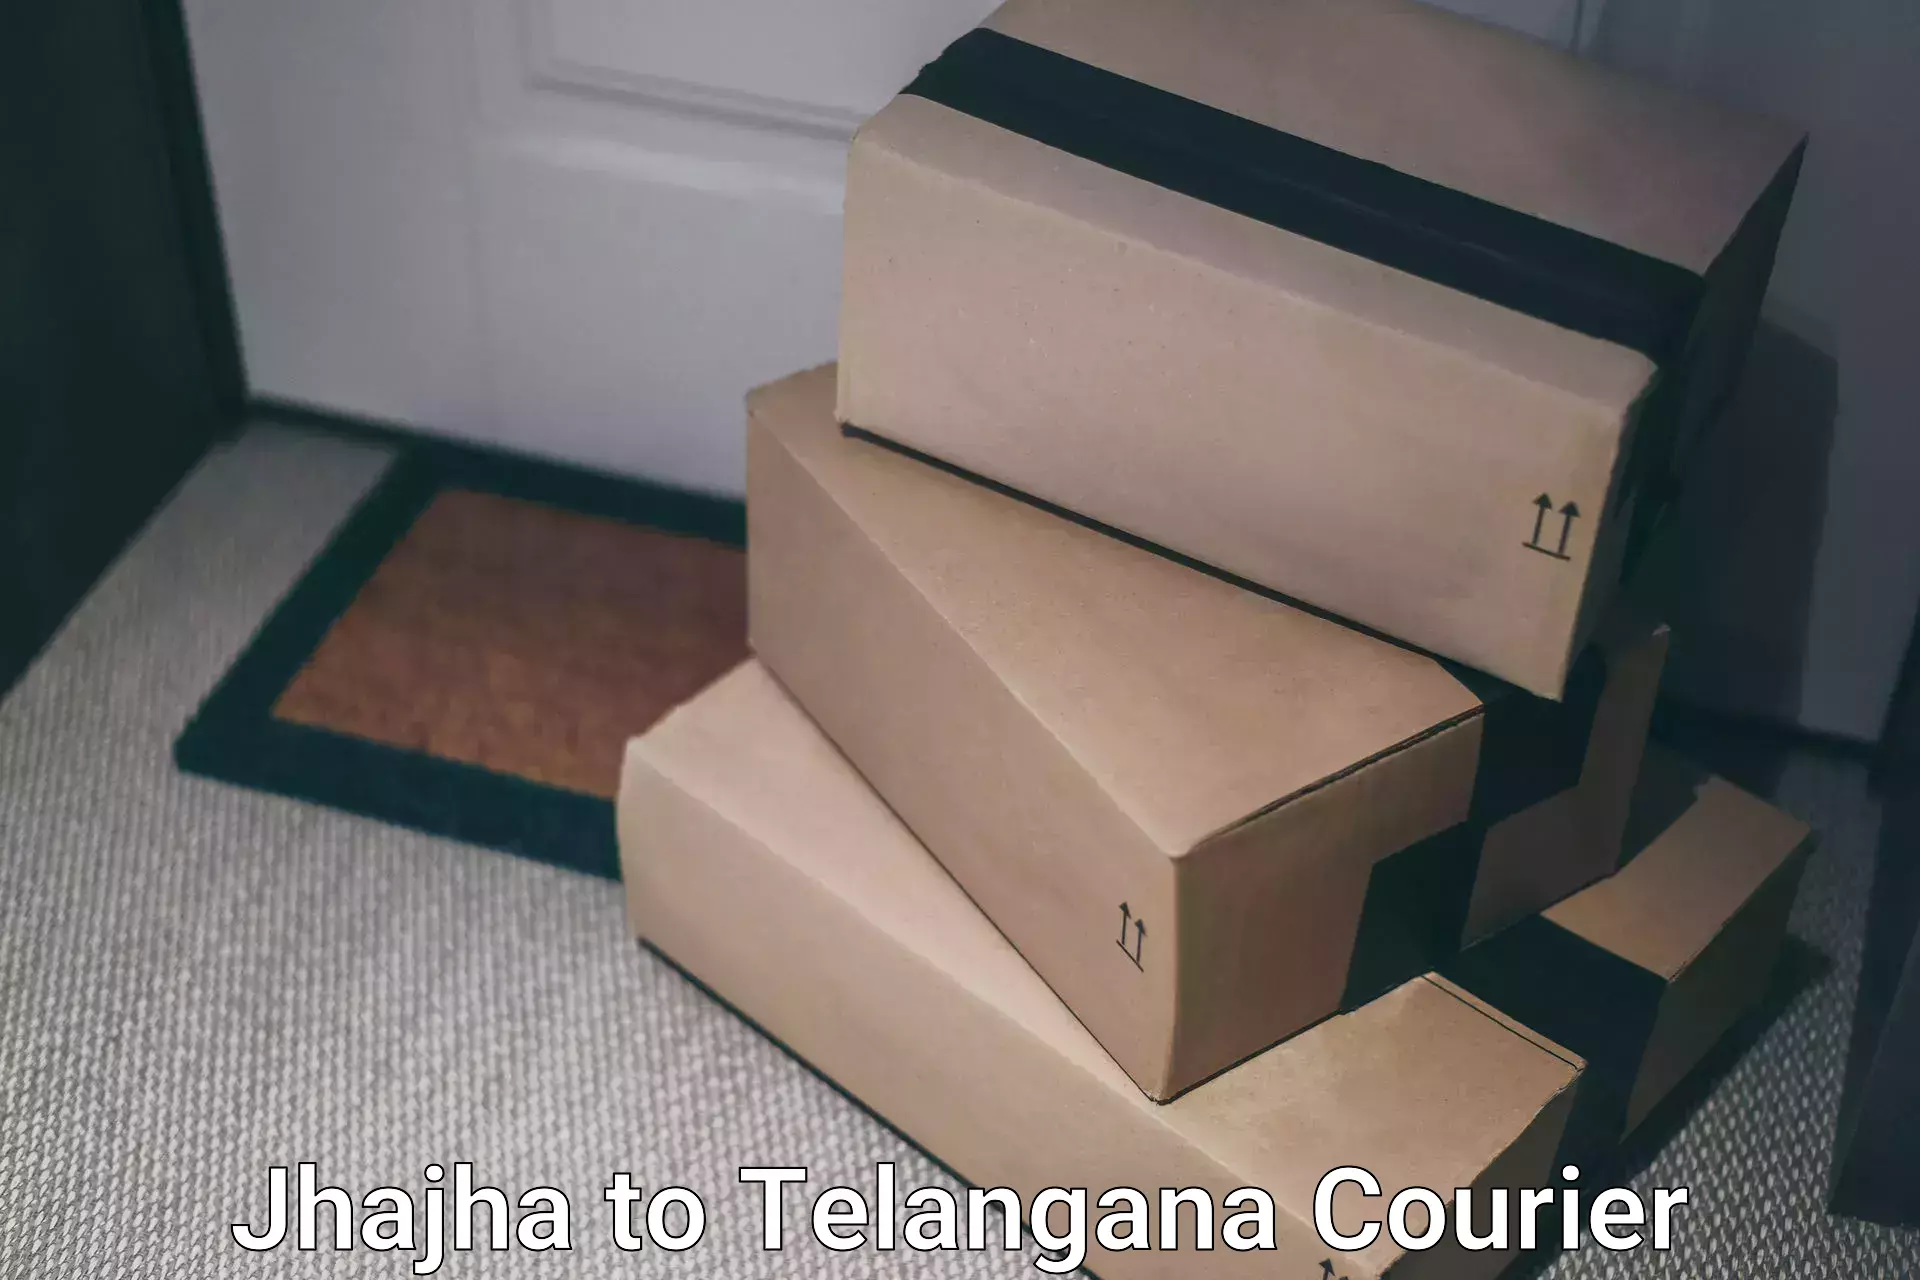 End-to-end delivery Jhajha to Hanamkonda